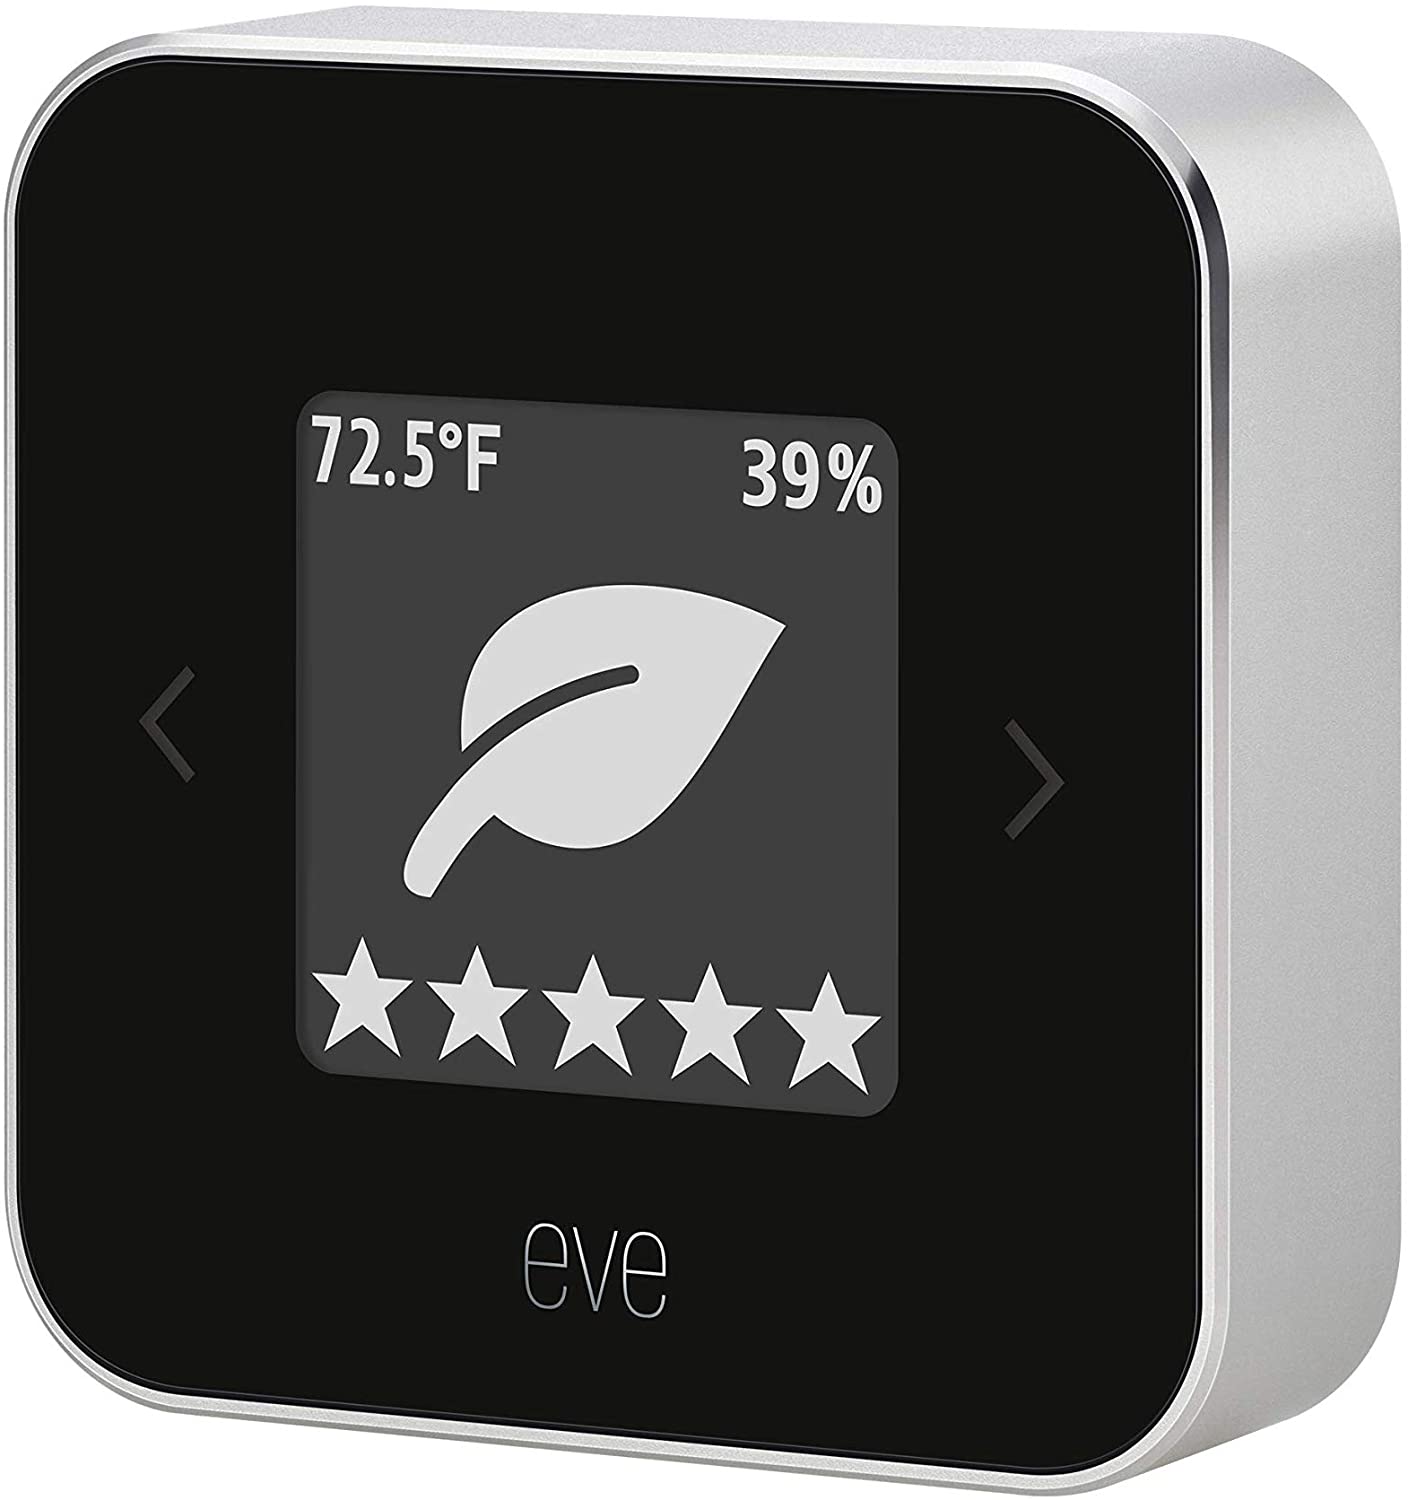 Eve Room Apple Homekit Smart Home Air Quality Temperature Monitor